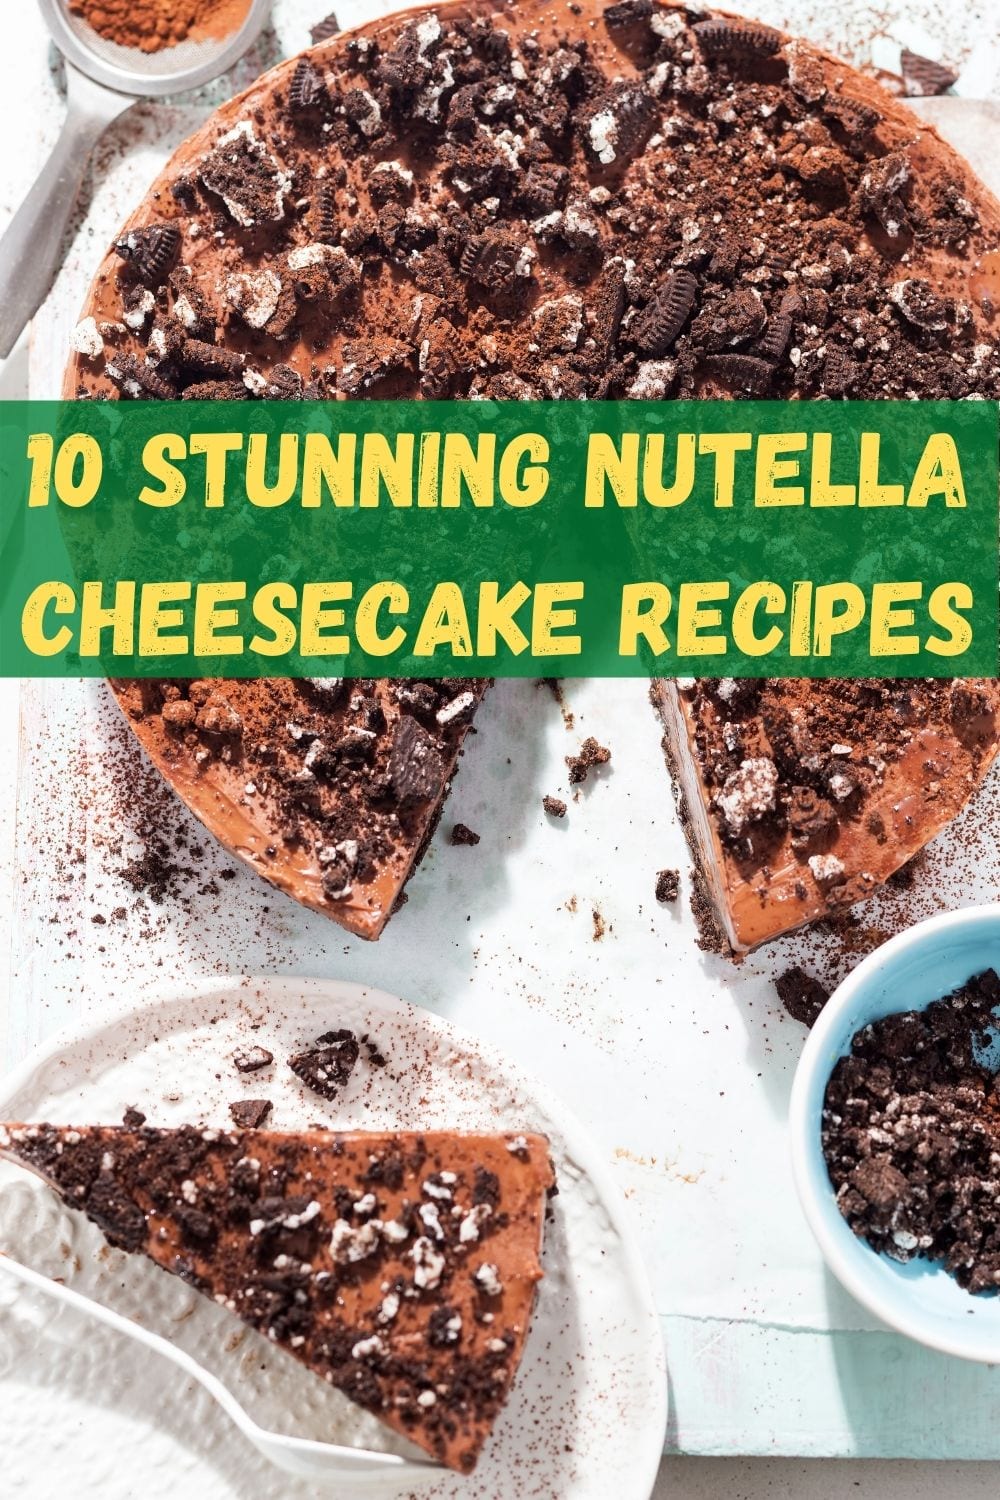 Nutella cheesecake recipes